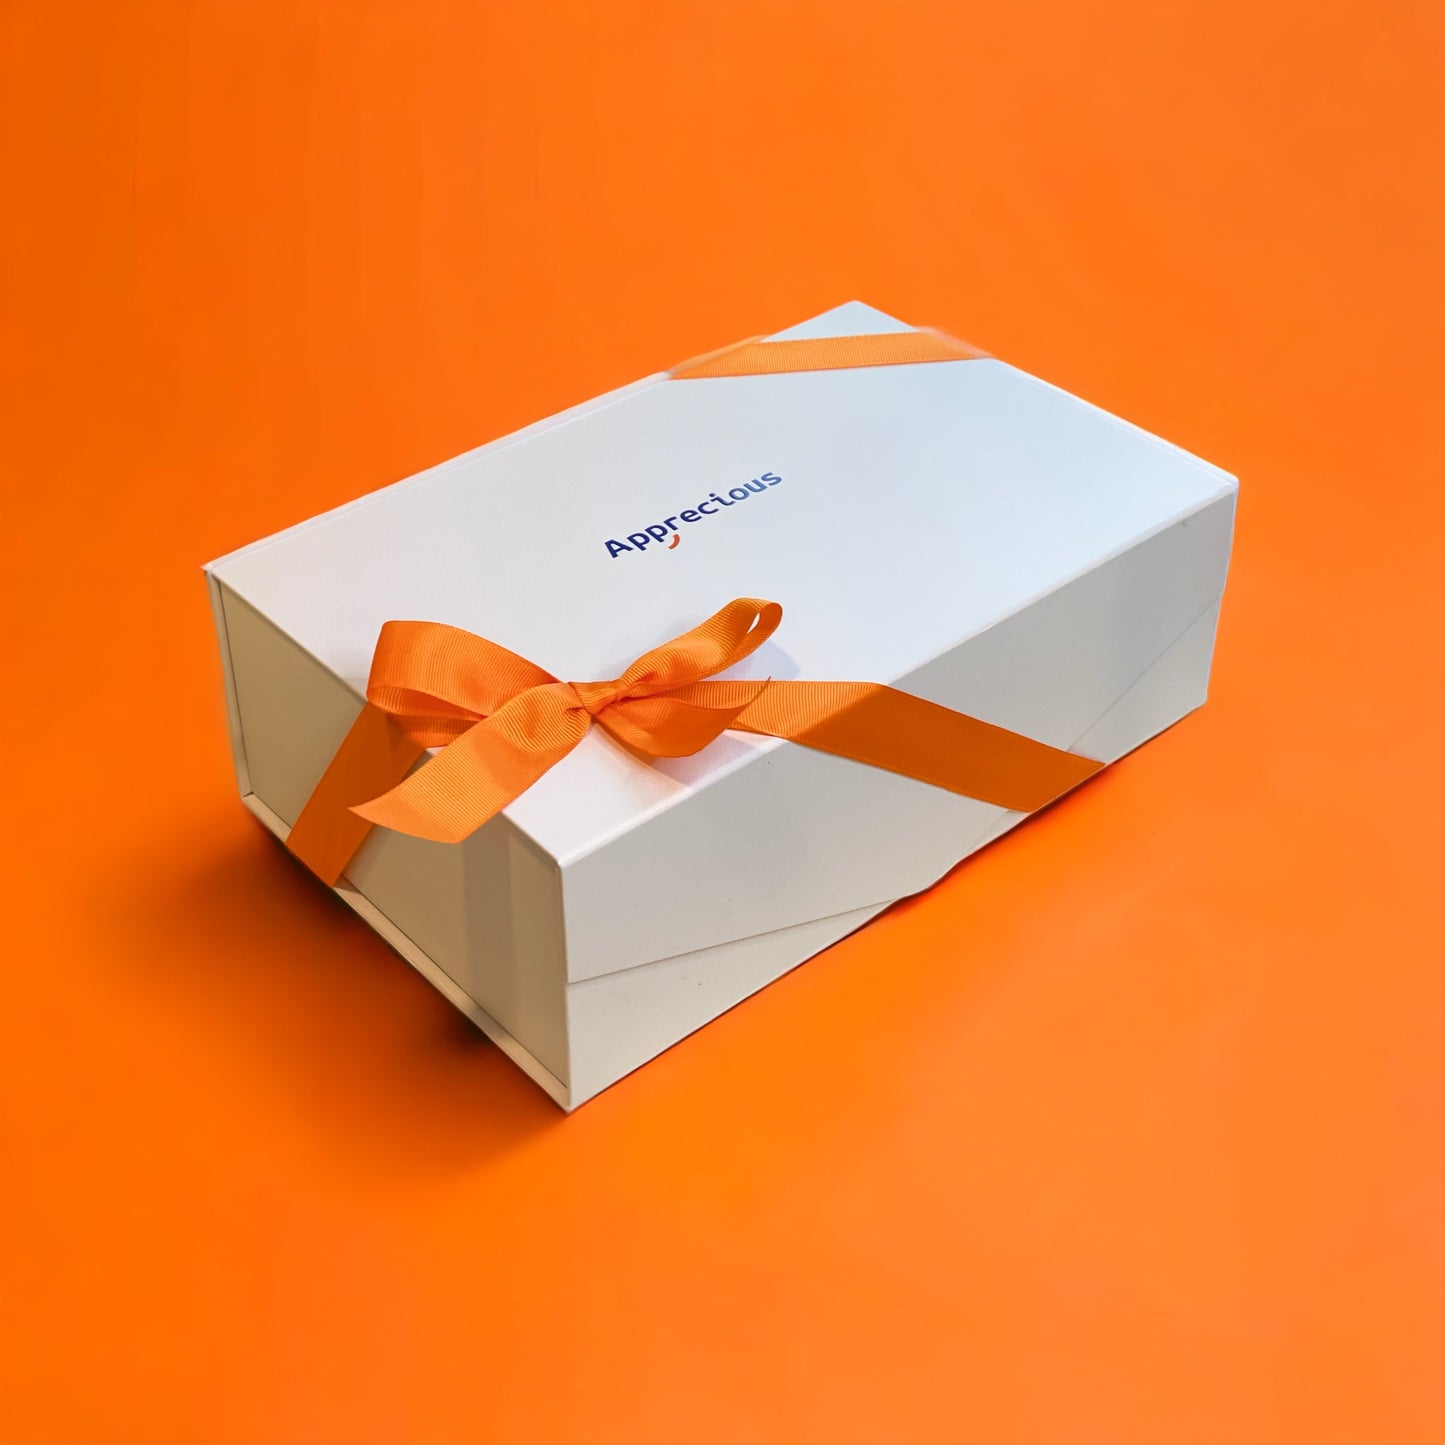 Apprecious Premium Gift Box (White)